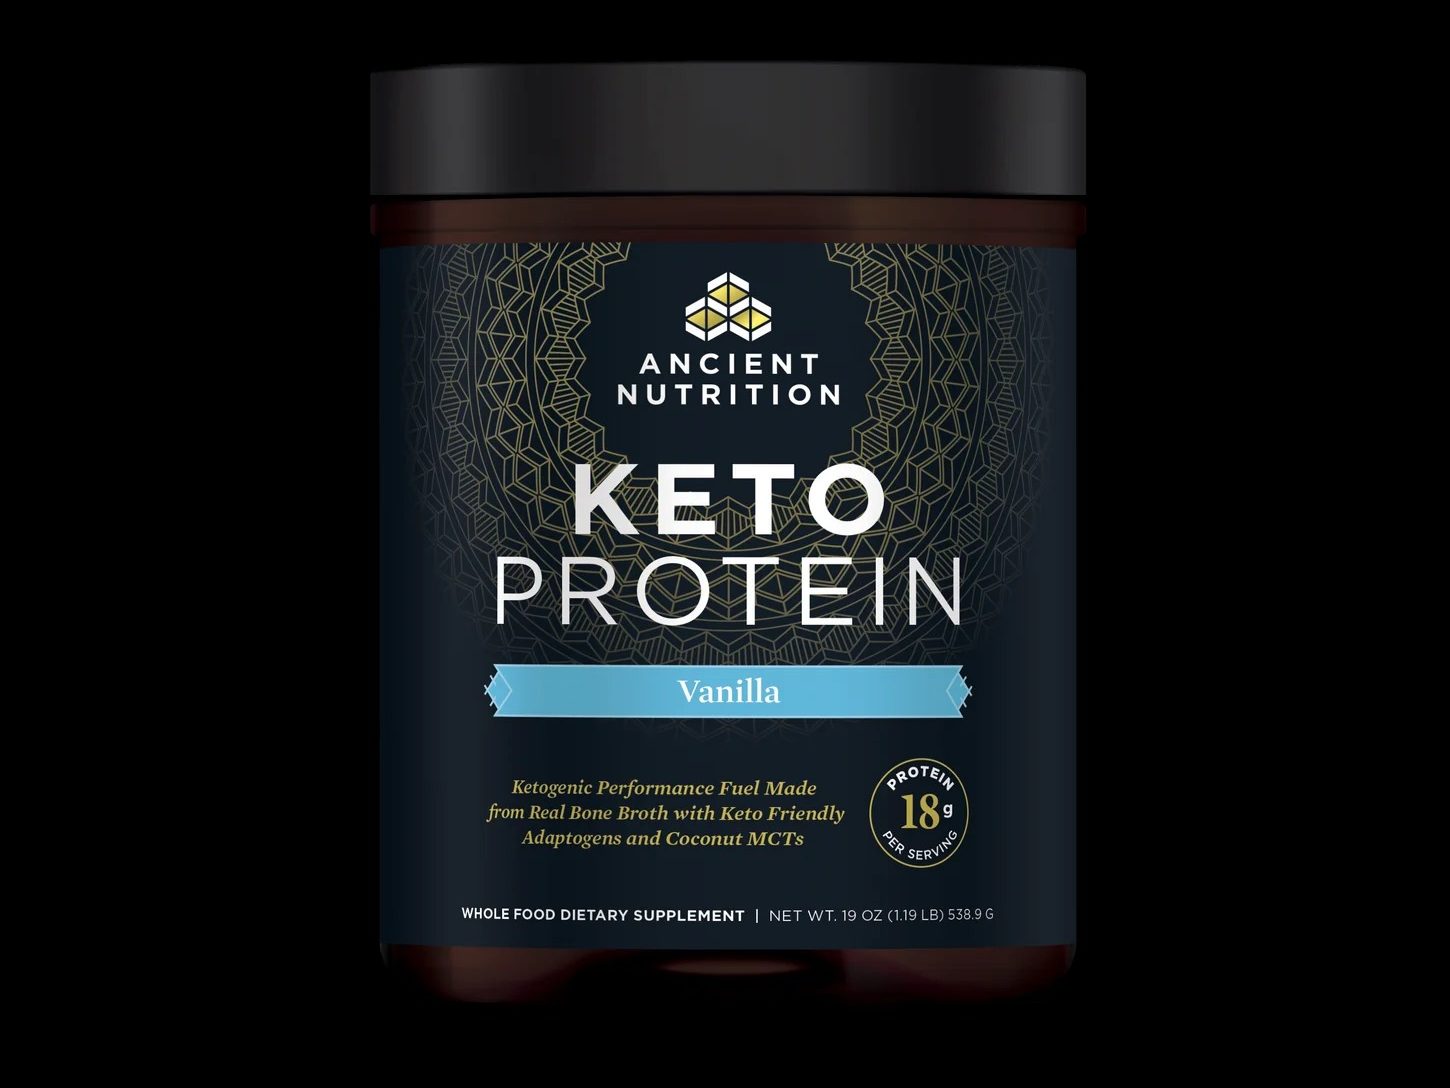 Ancient Nutrition Keto Protein Powder